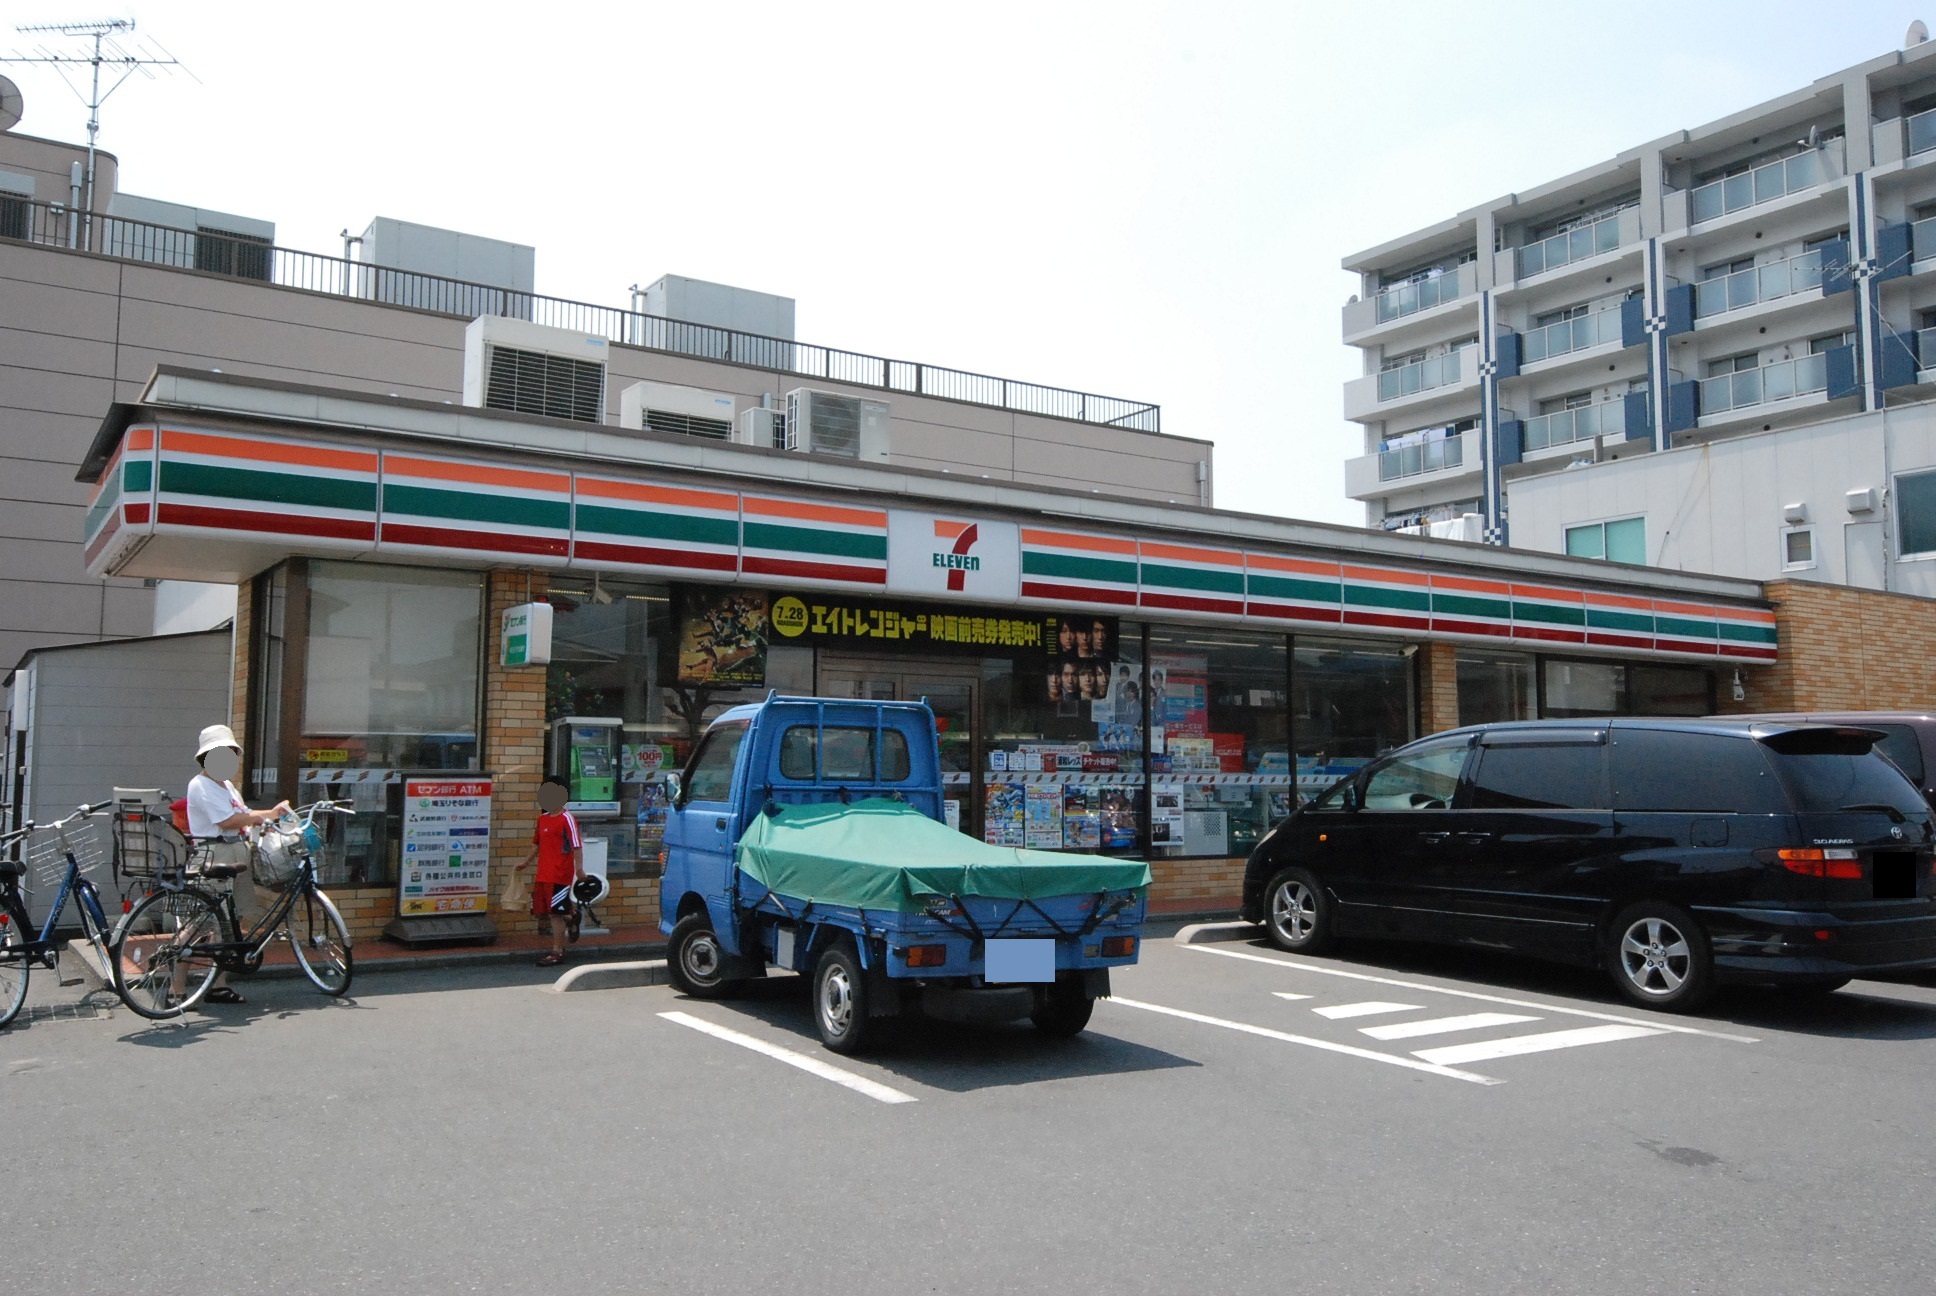 Convenience store. Seven-Eleven Kukihigashi 2-chome up (convenience store) 130m